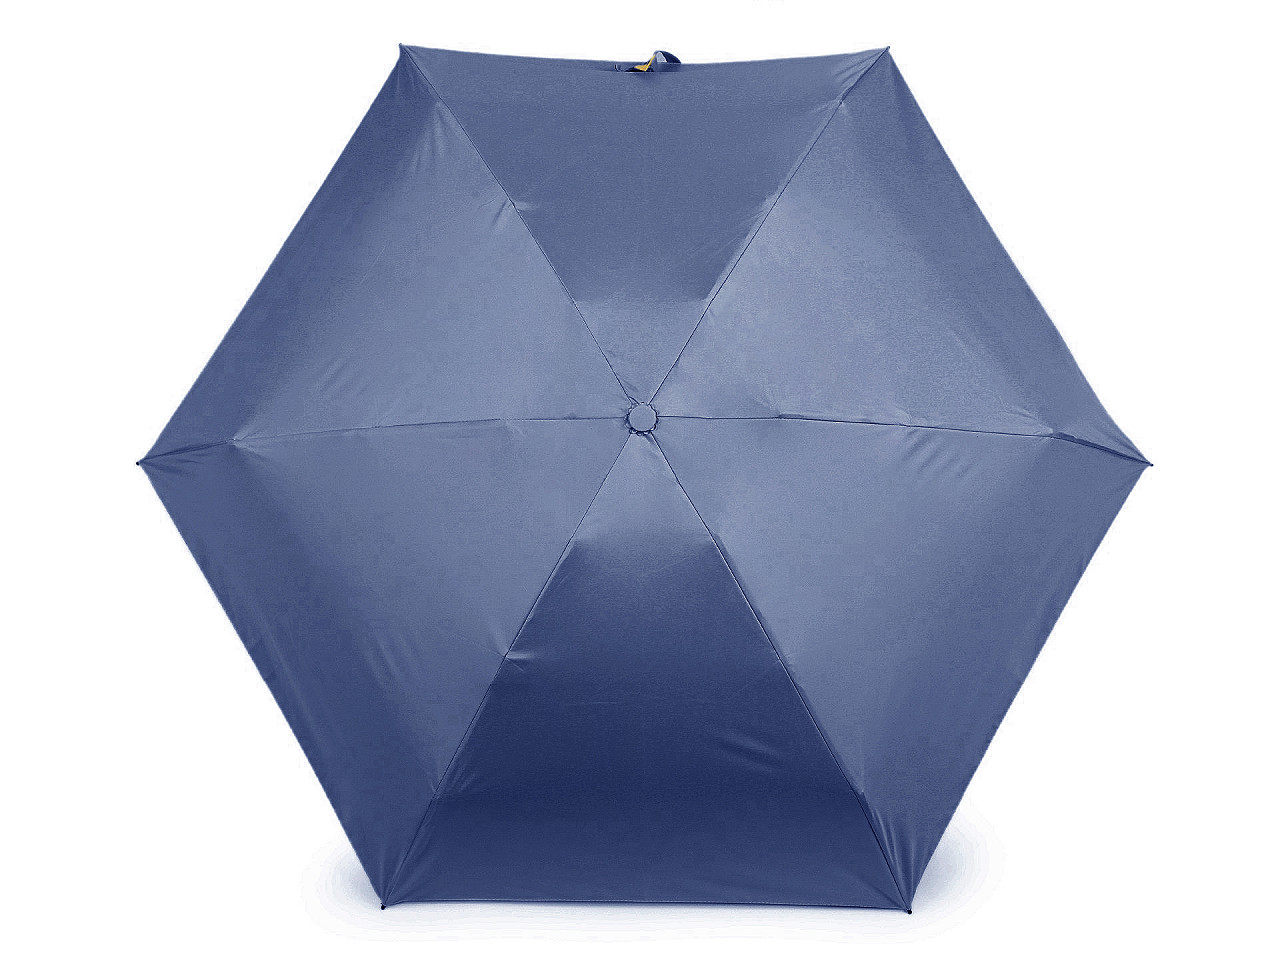 Faltbarer Mini-Regenschirm mit festem Etui, Jeansblau, 1 Stk.